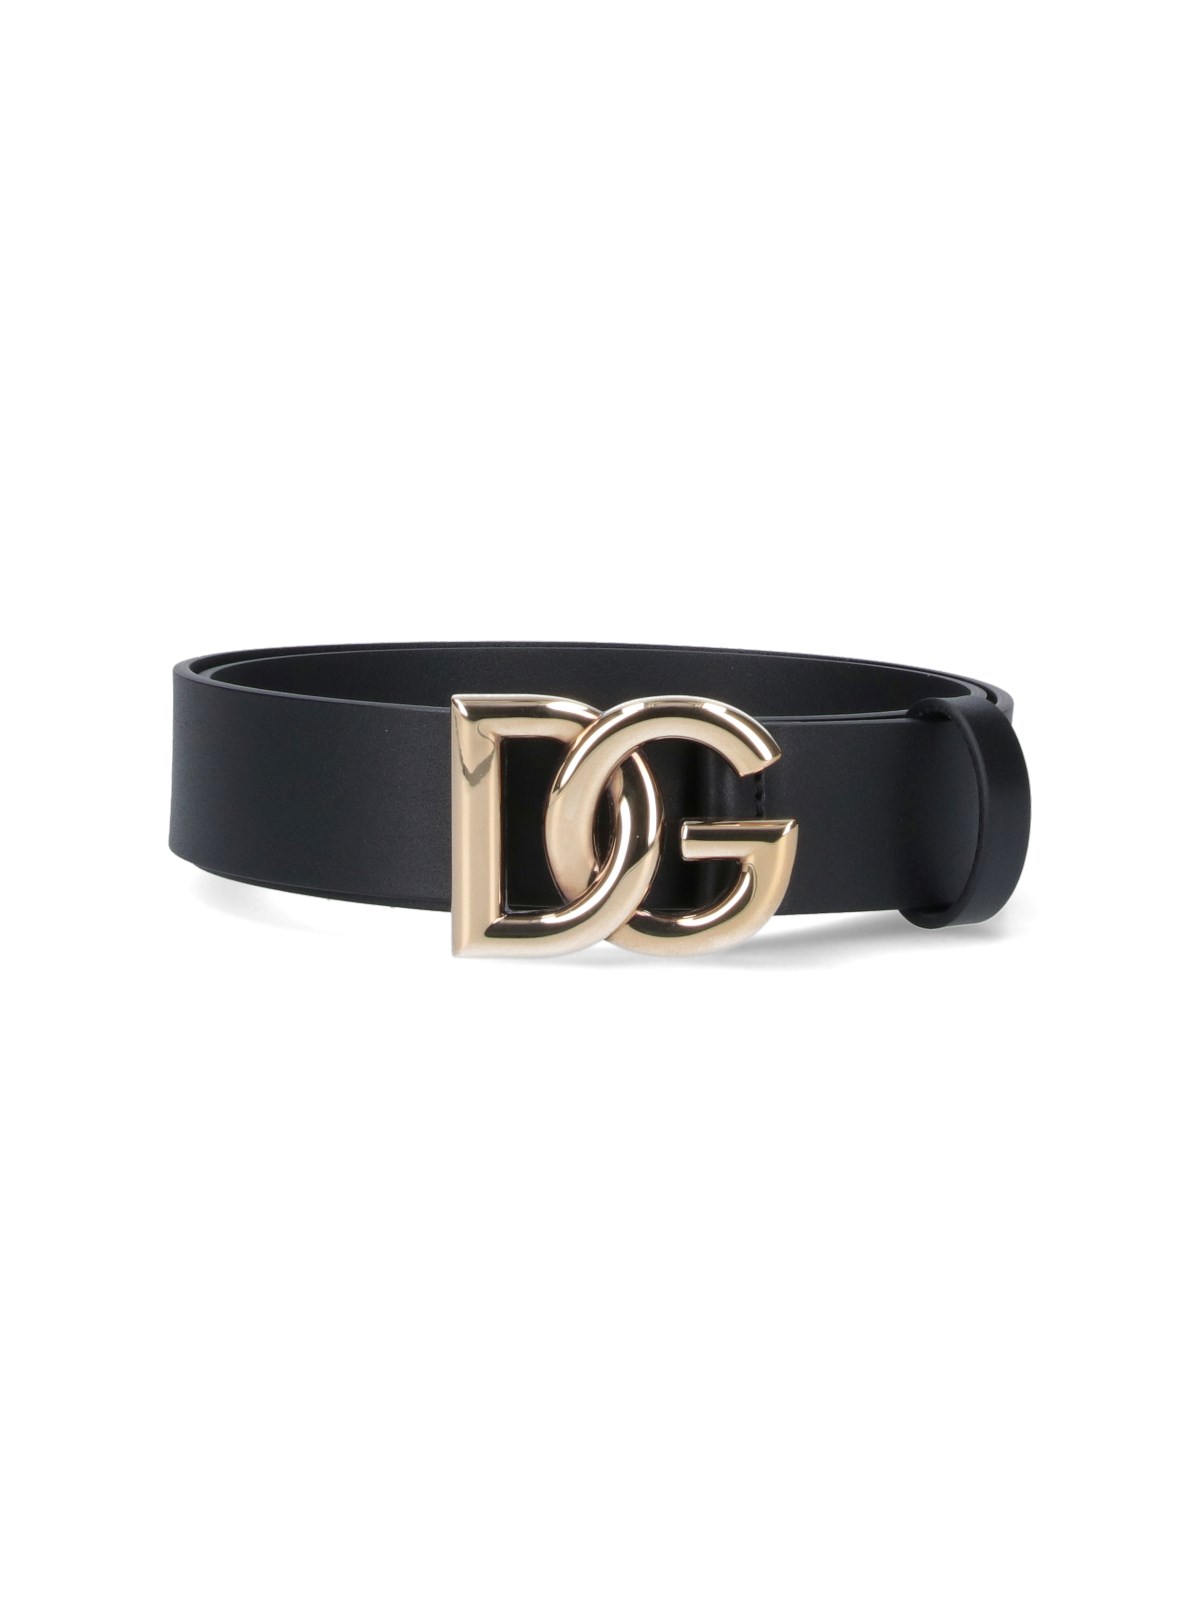 Dolce & Gabbana 'dg' Buckle Belt In Black